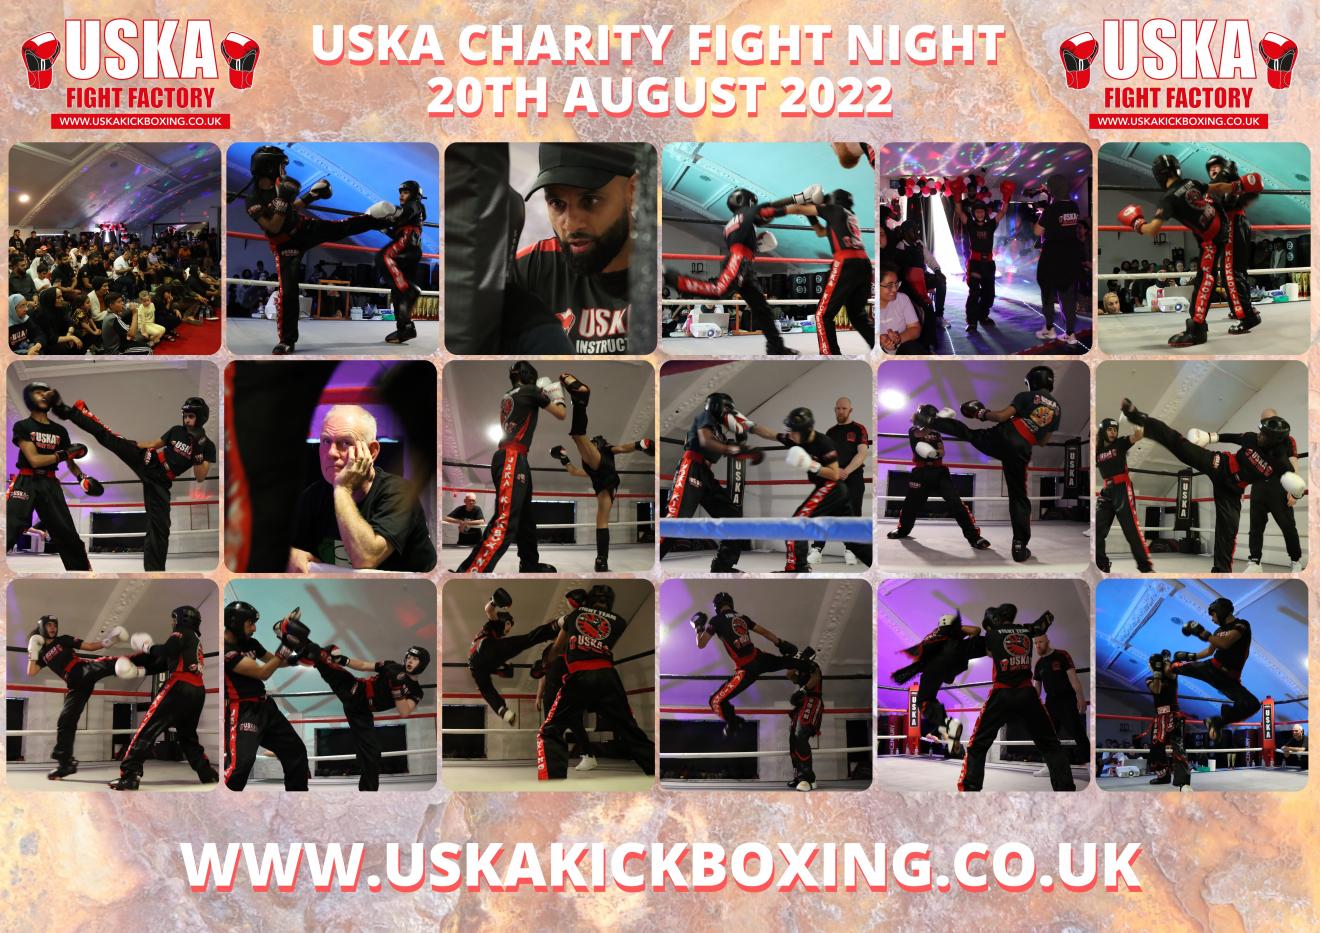 20-08-22 - USKA Charity Fight Night an Amazing Success!